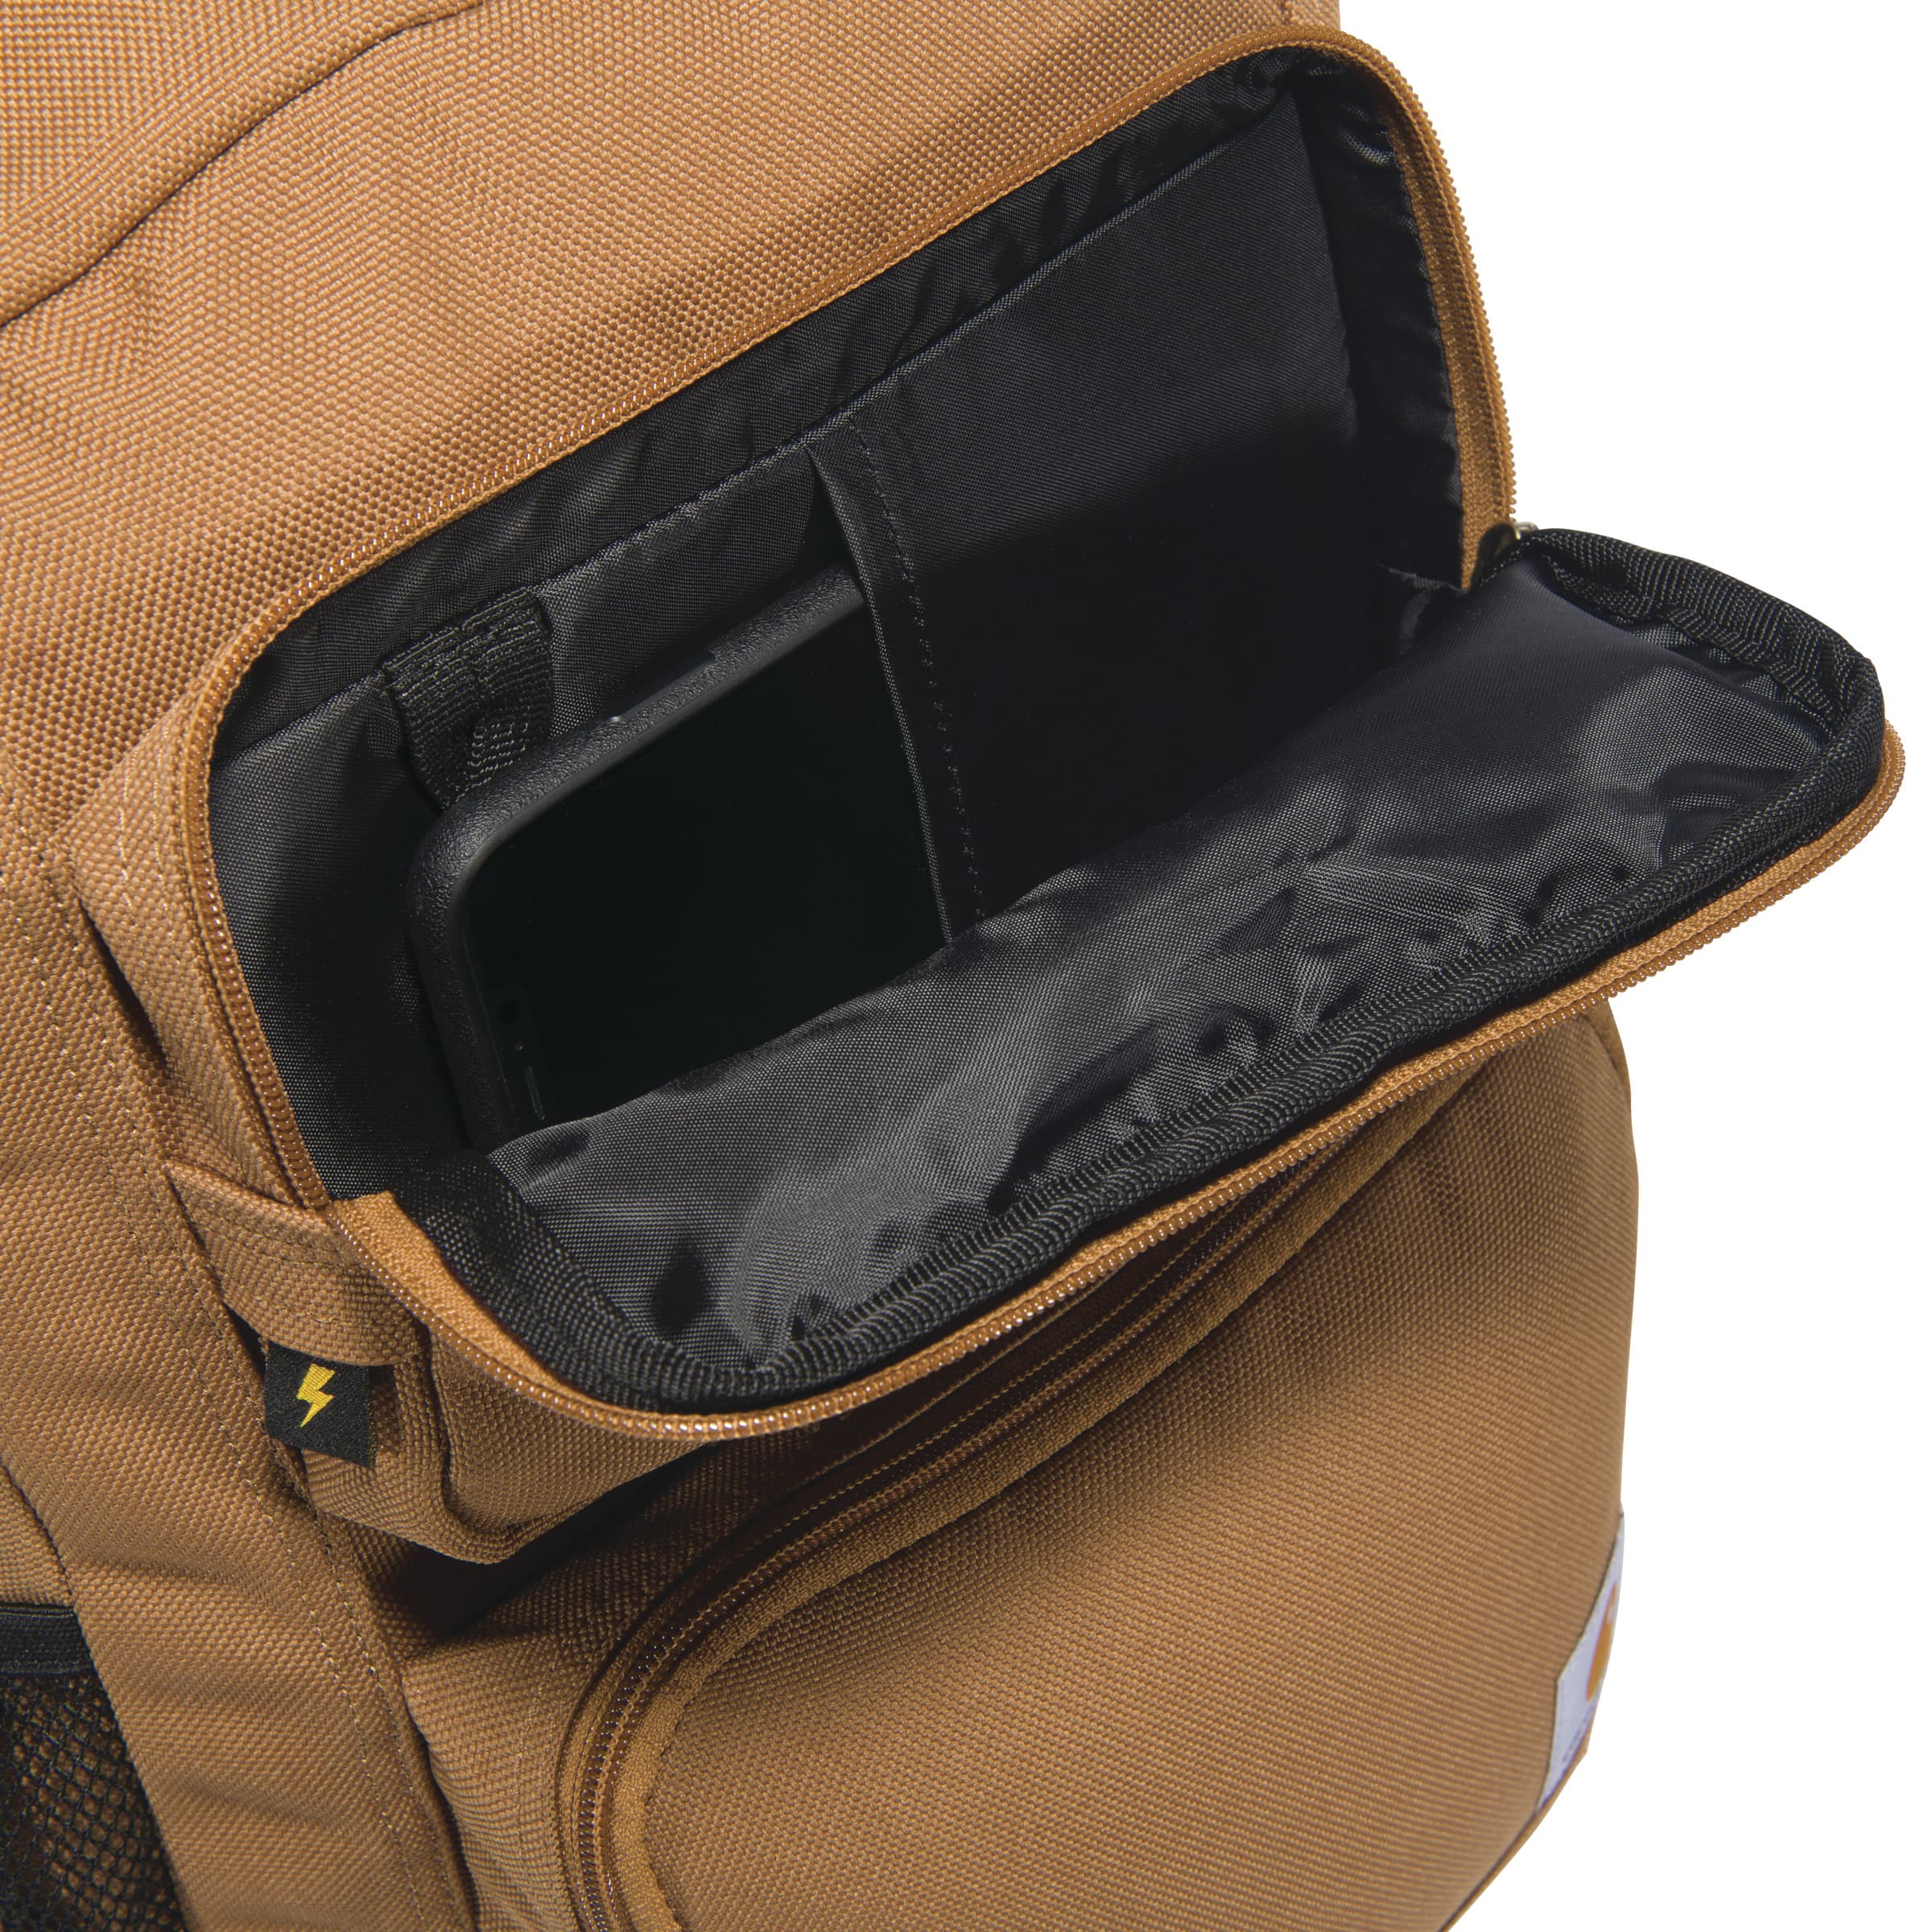 Carhartt® Dual-Compartment 28L Backpack - Carhartt Brown